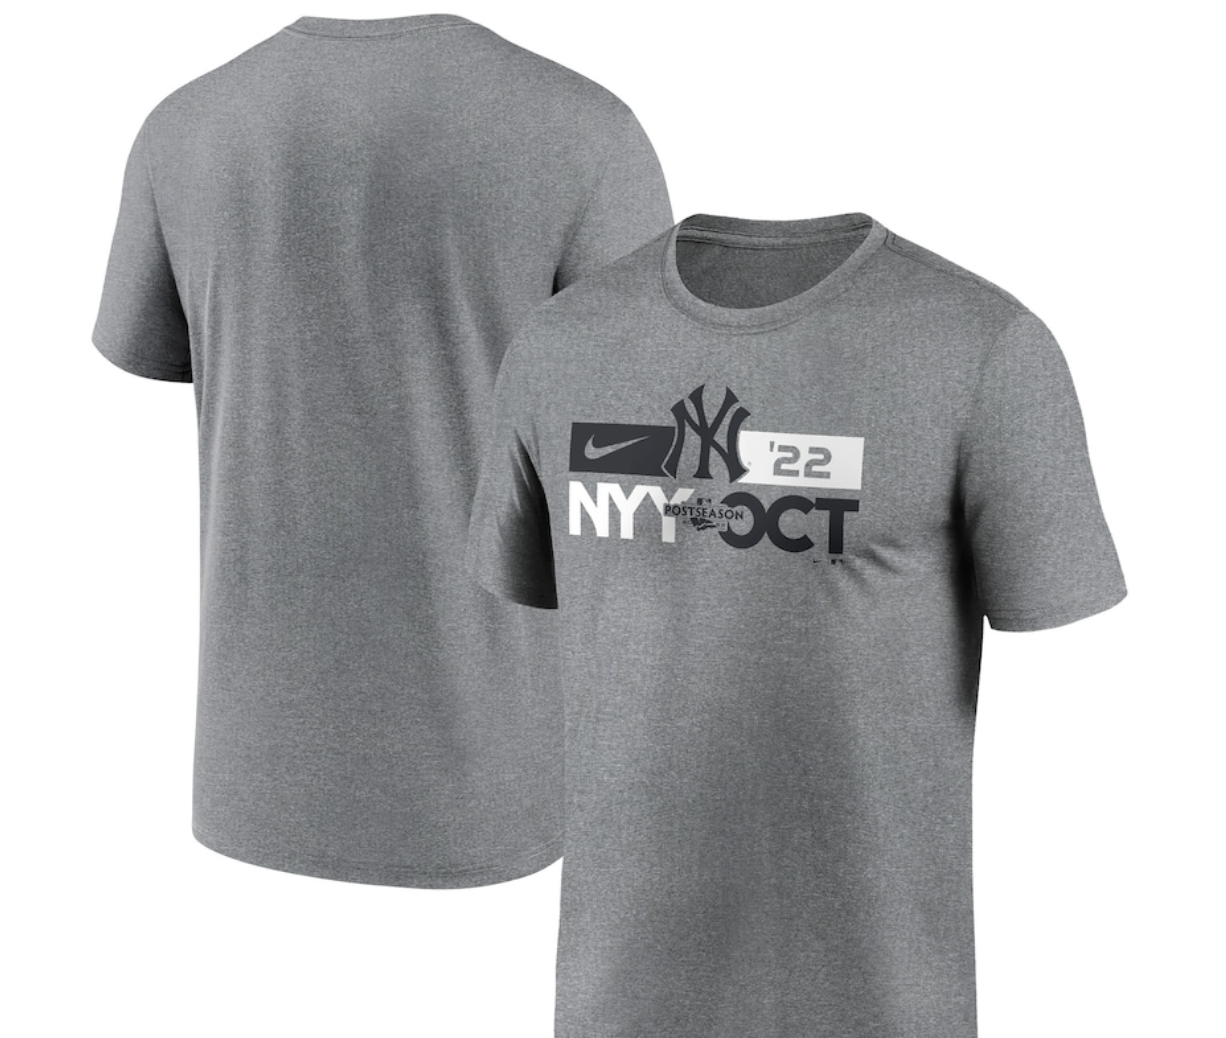 MLB New York Yankees Take October 2023 Postseason Shirt